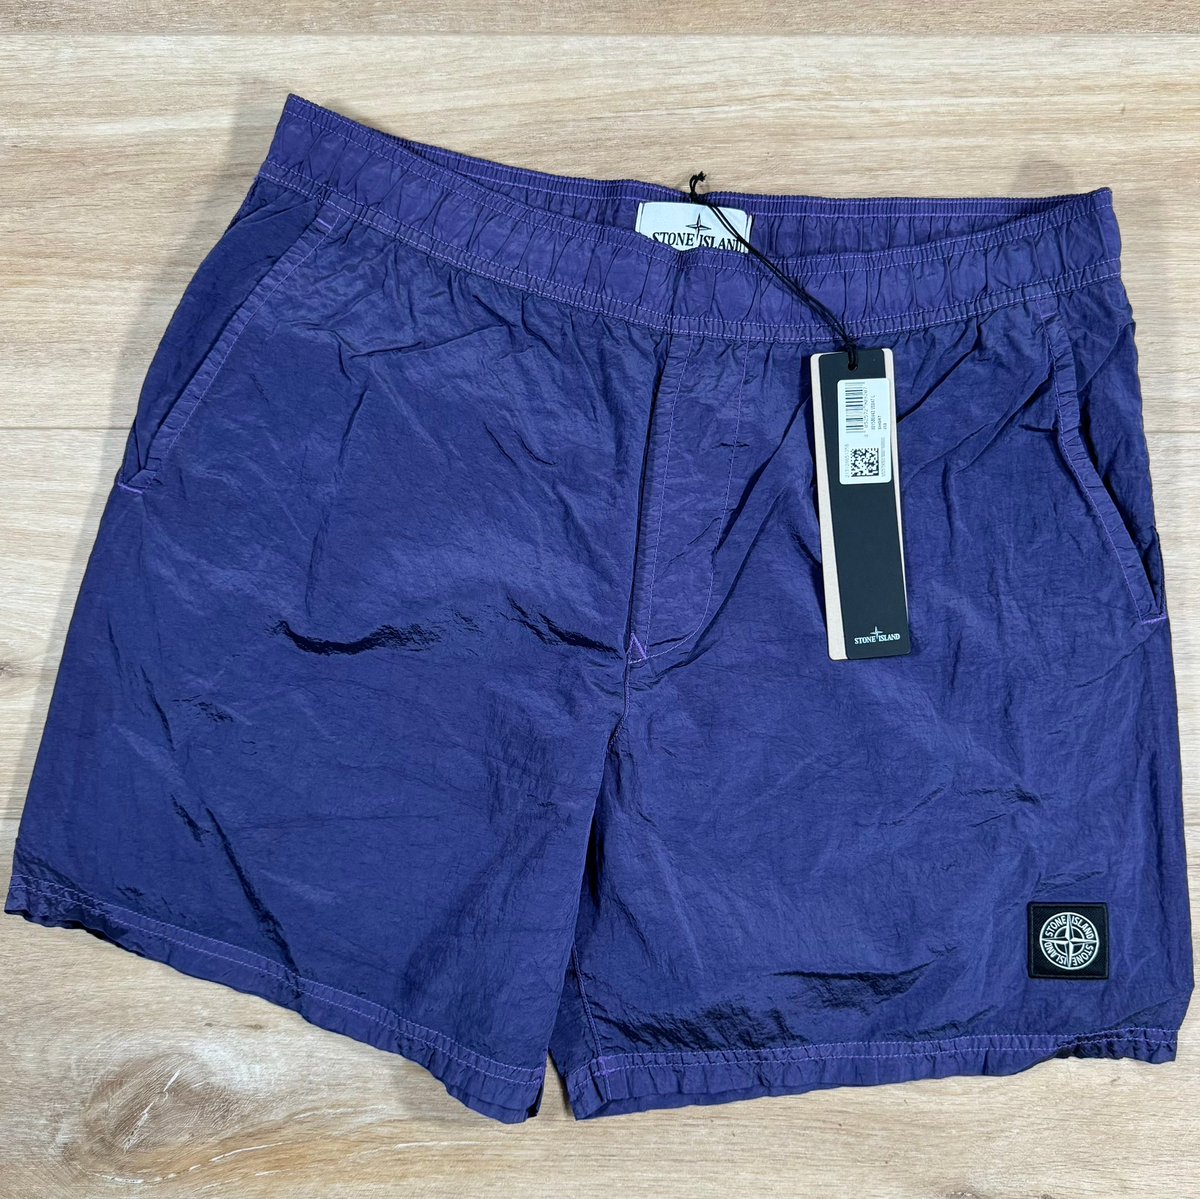 Stone Island swim shorts in Lavender BUY 👉🏼 label-menswear.com/products/stone…